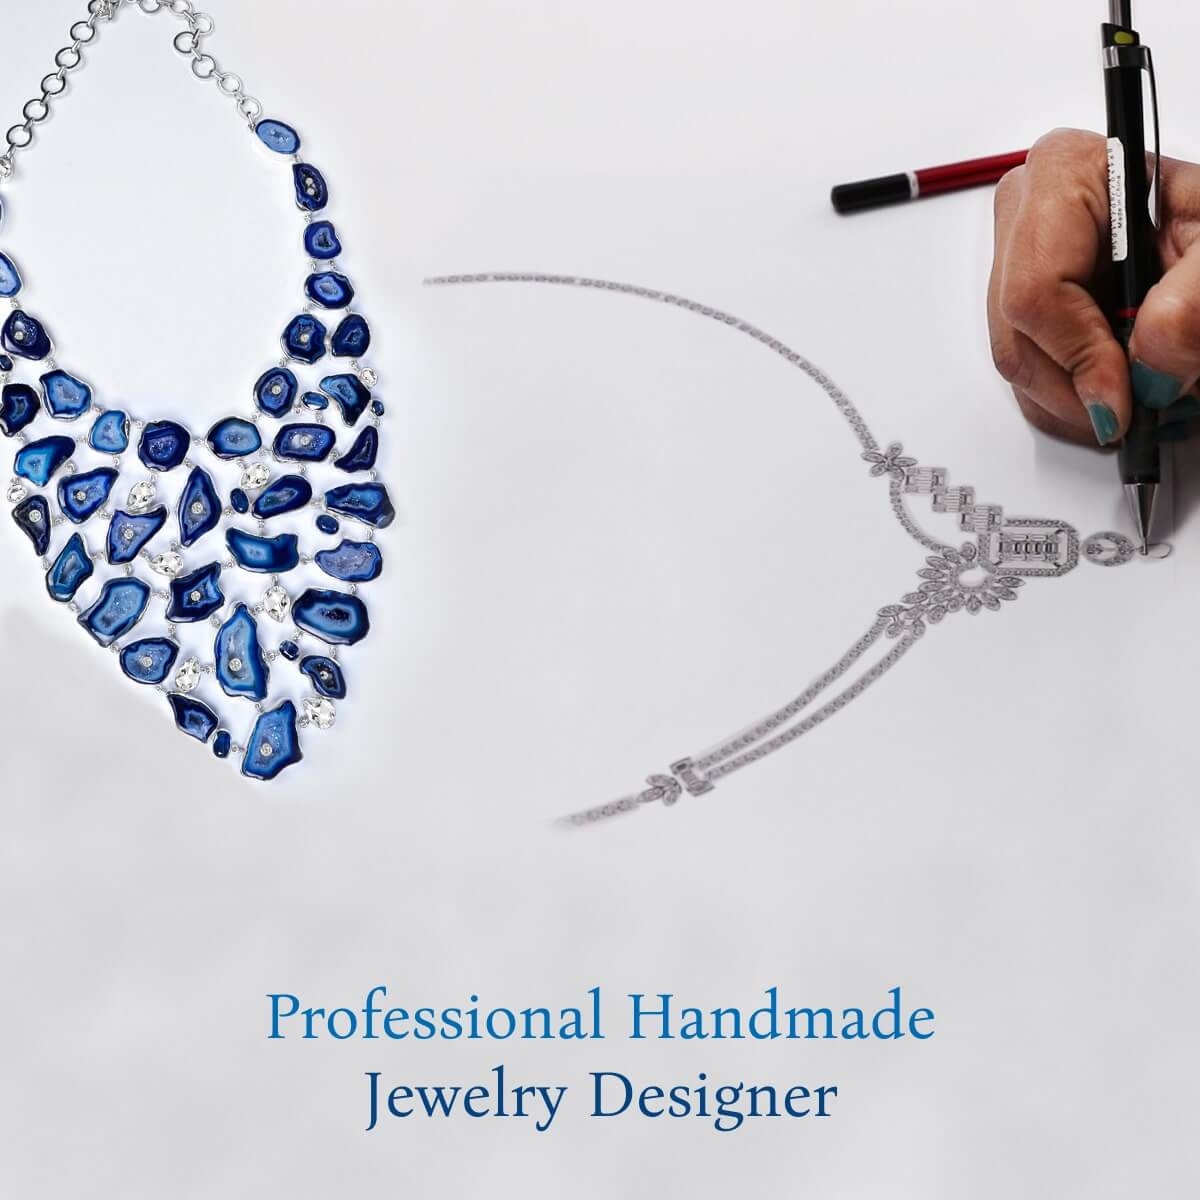 Handmade Jewelry Designer